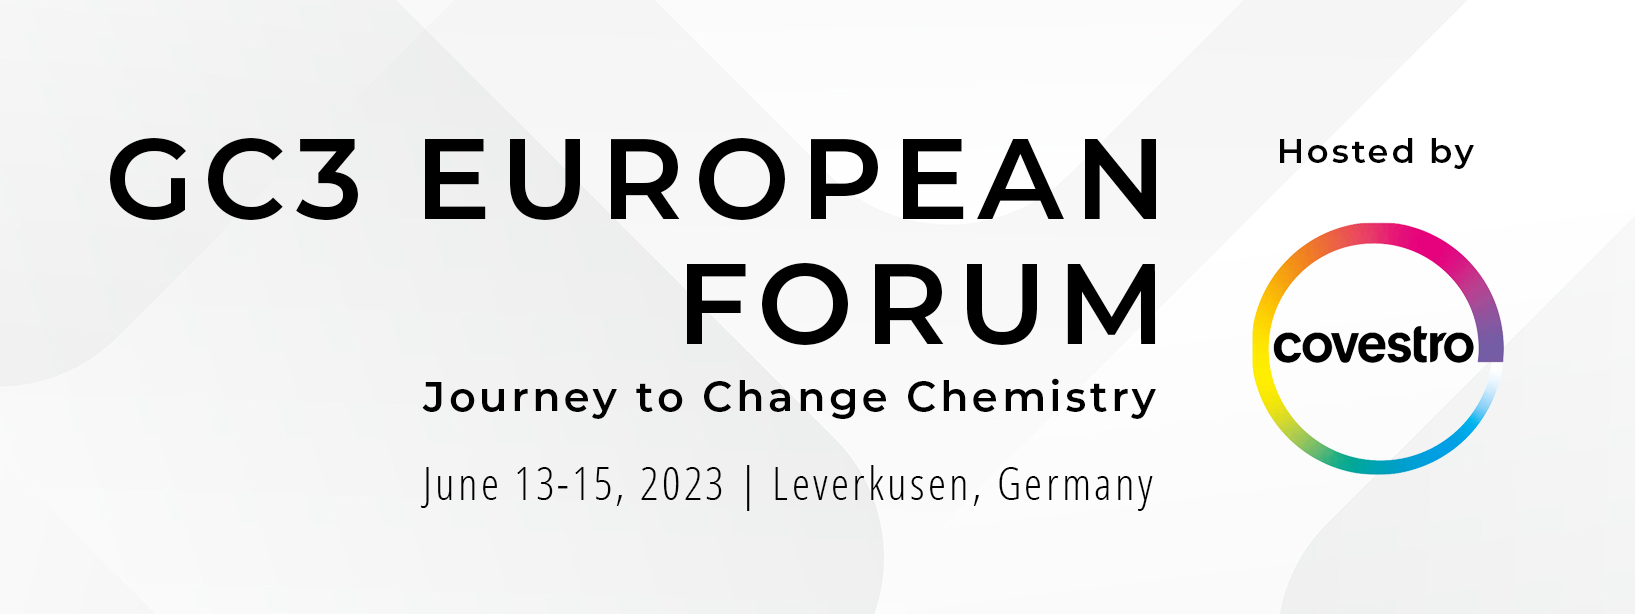 gc3 european forum